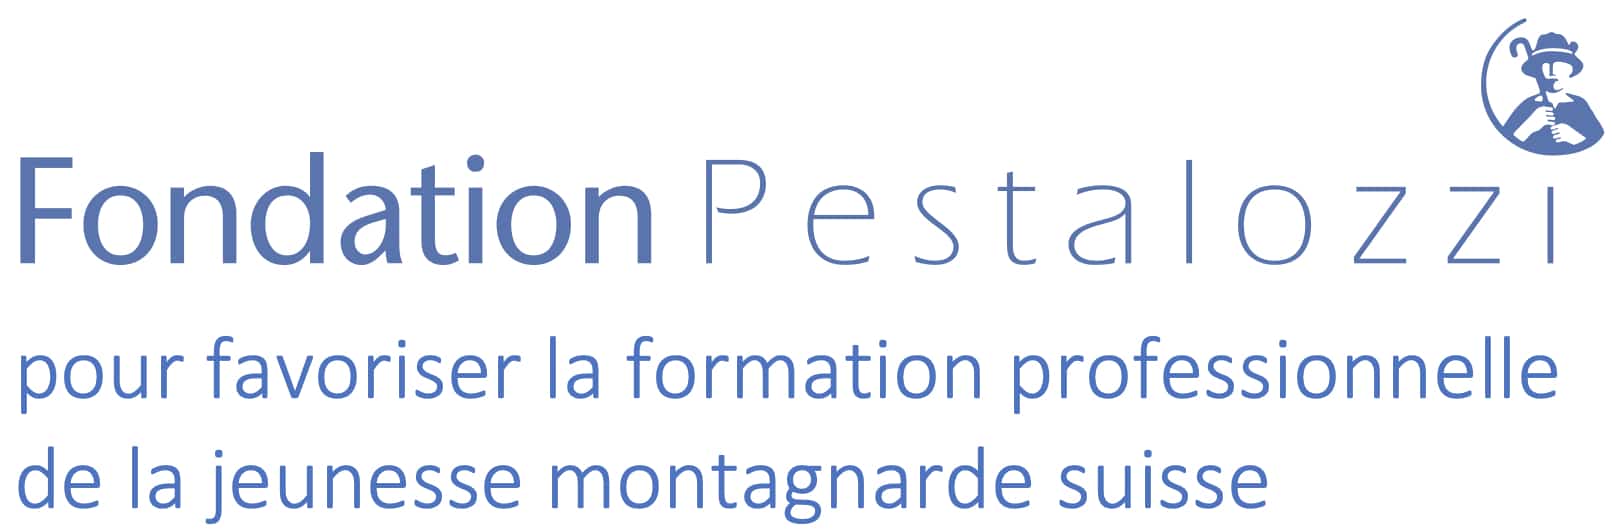 pestalozzi logo caption